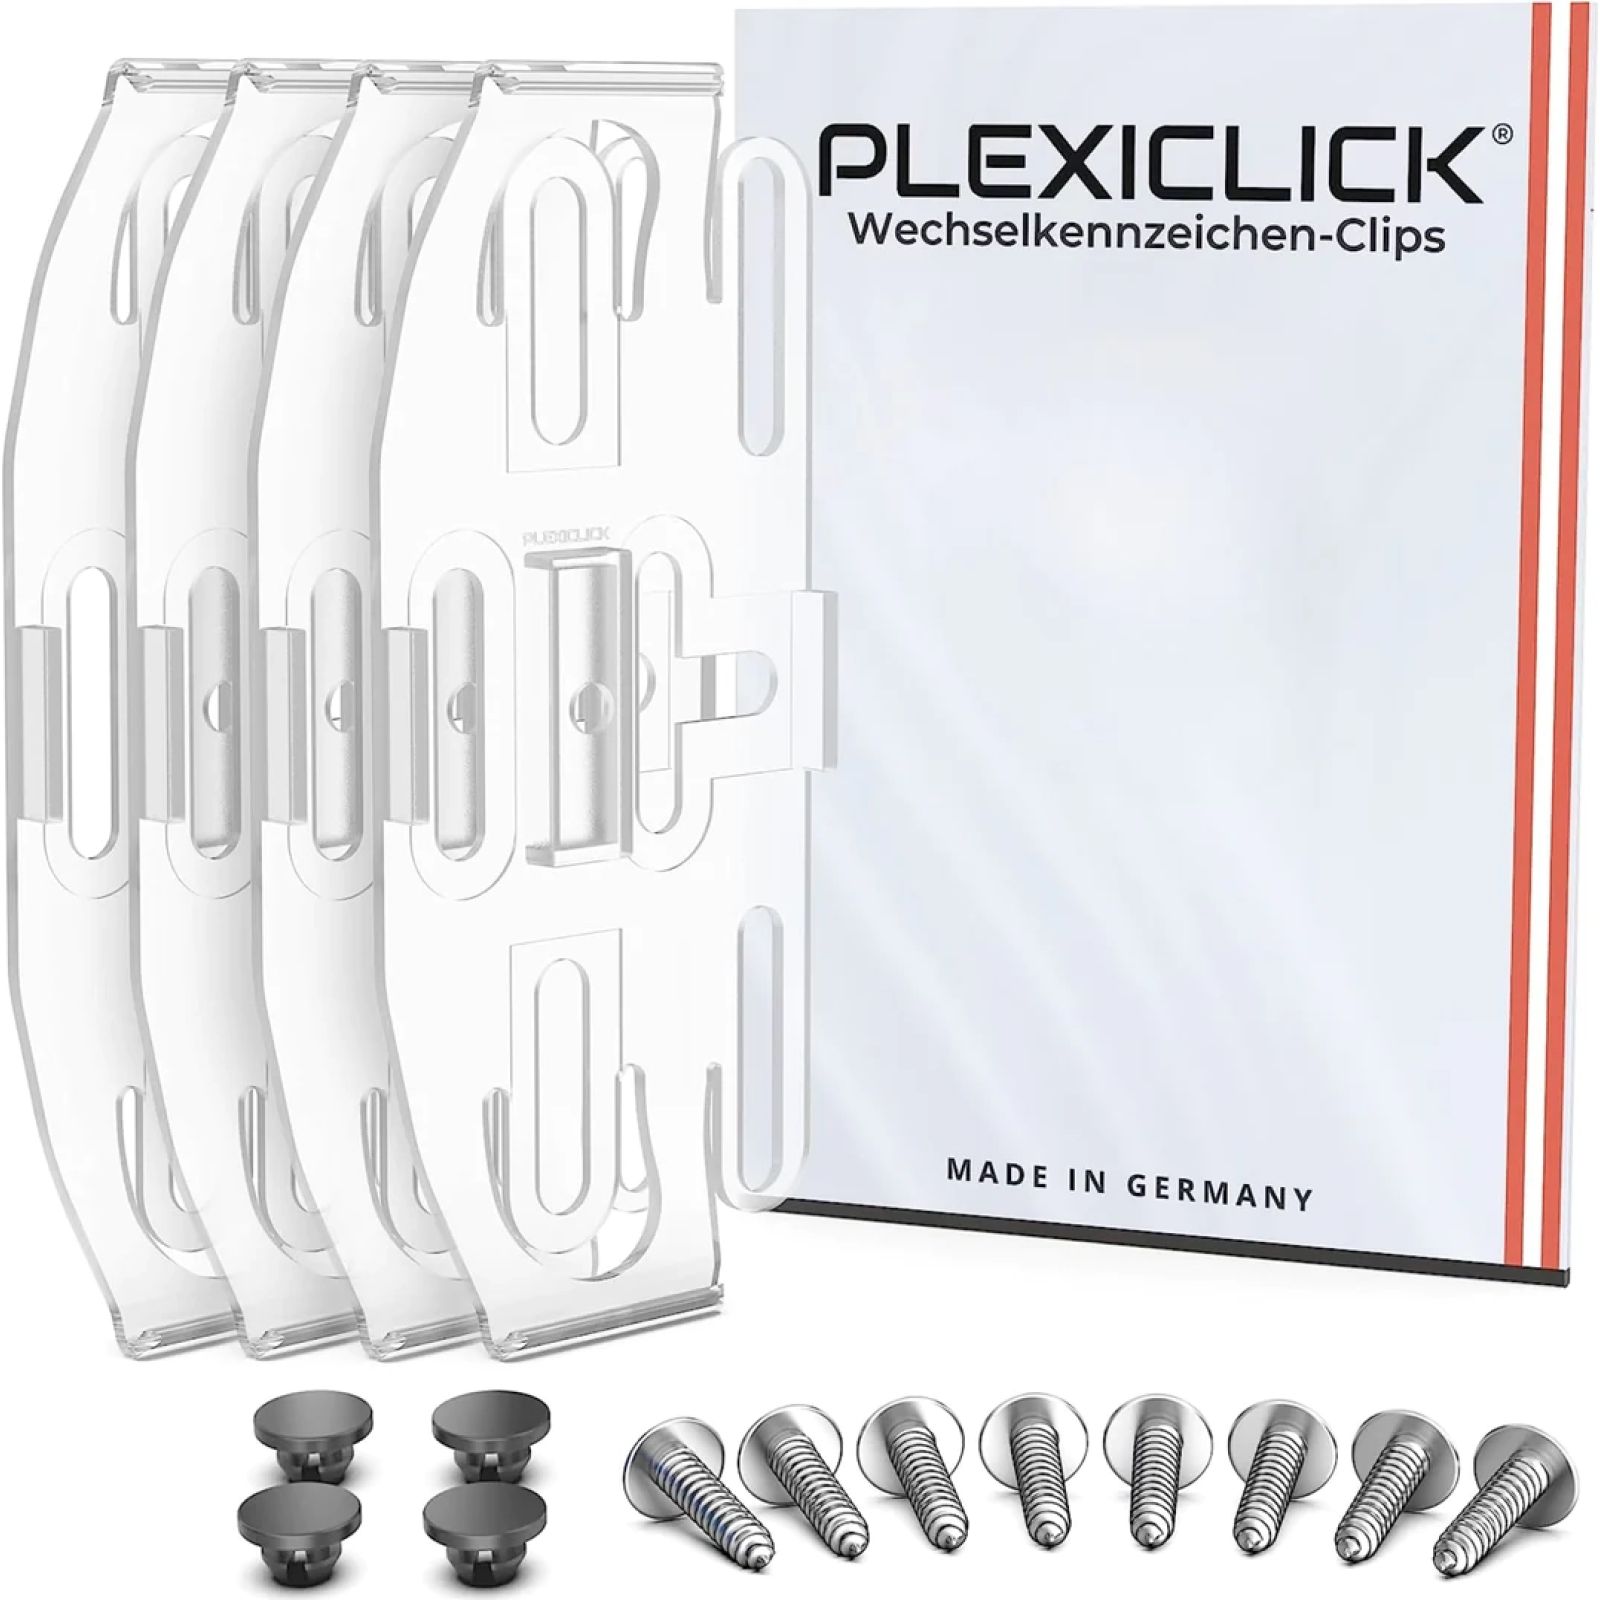 Rahmenlose Kennzeichenhalter Plexi Click V3 Transparent | Plexiclick V3  transp